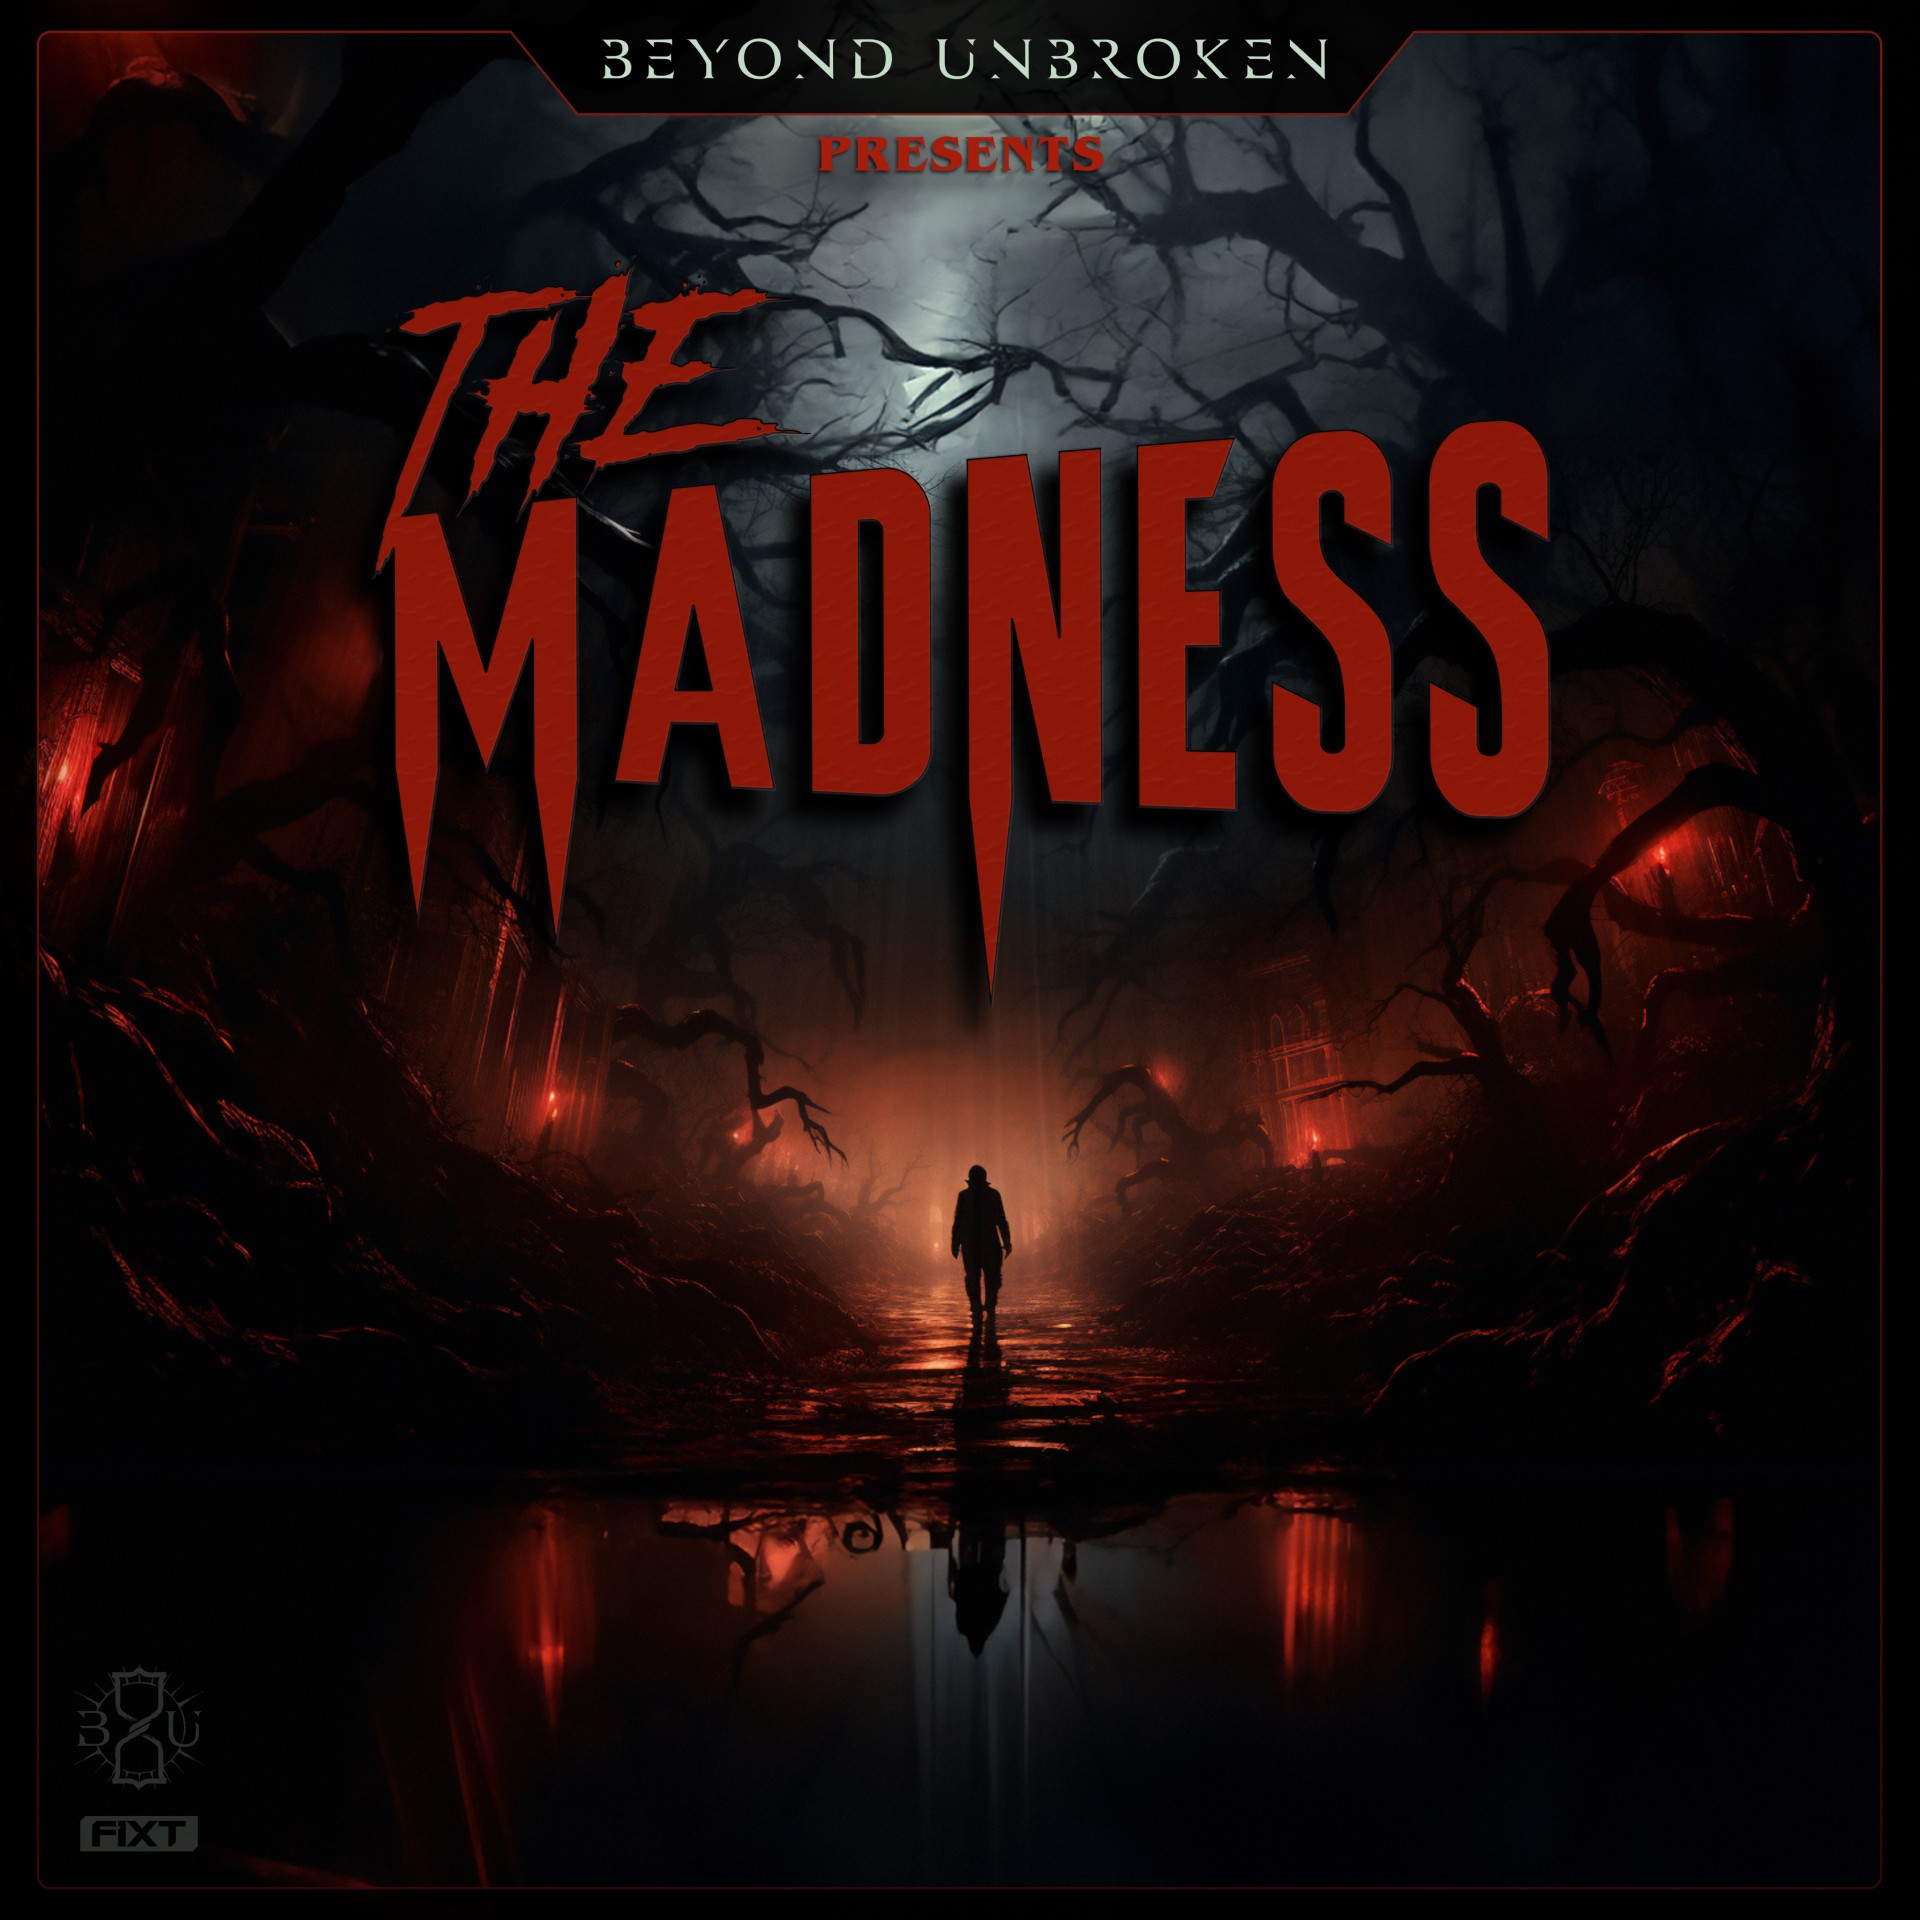 Beyond Unbroken “The Madness” single artwork